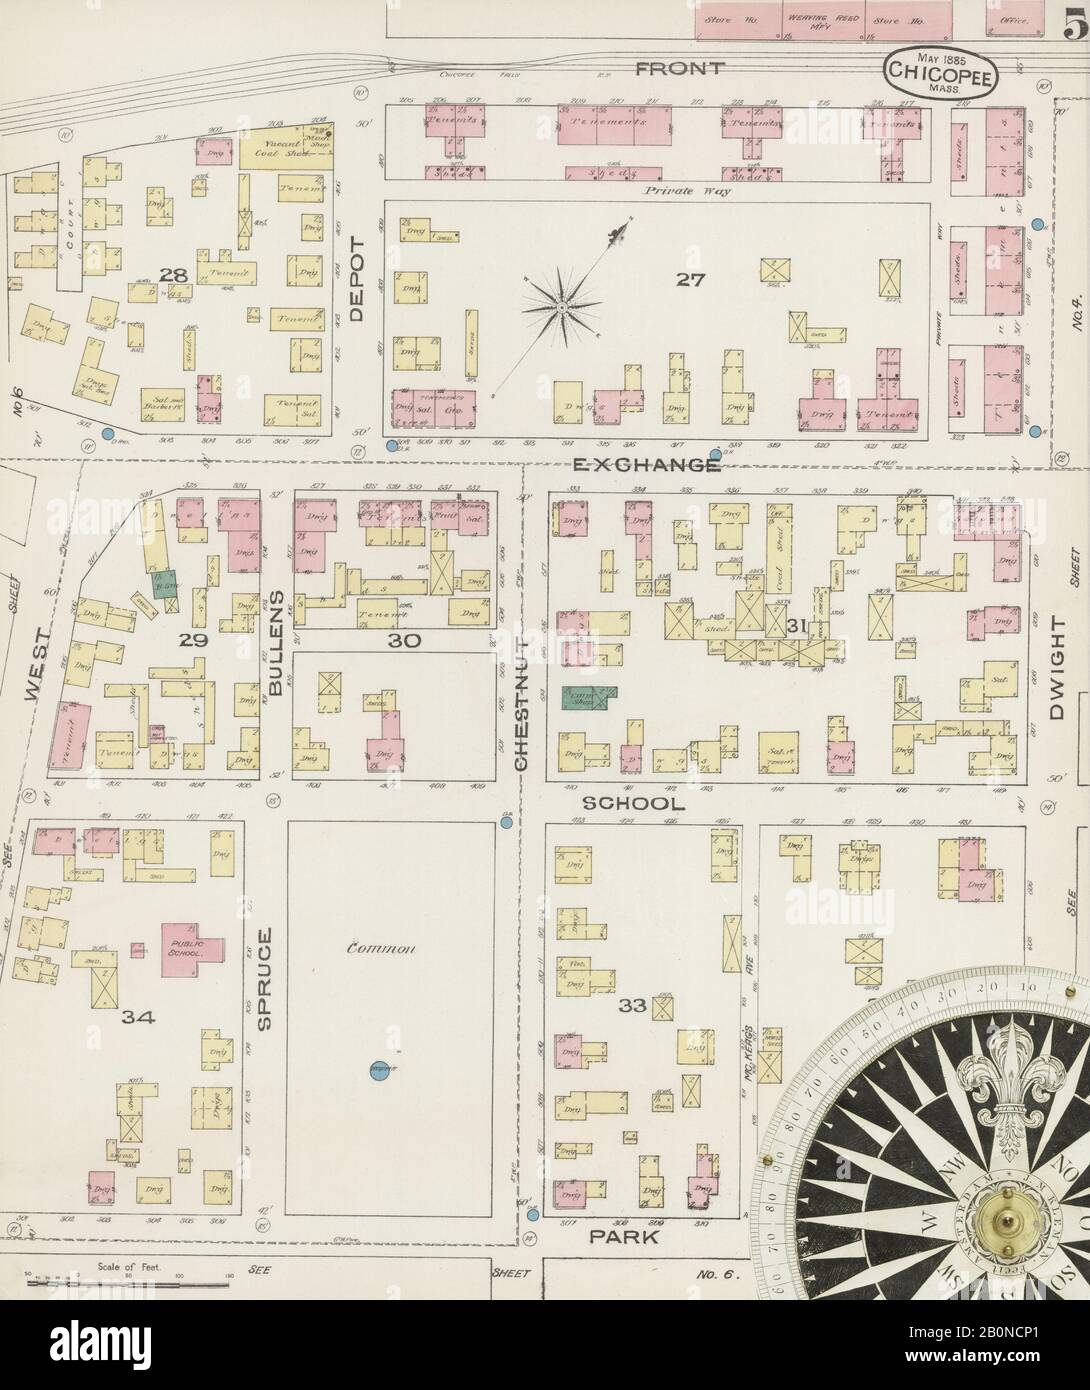 Bild 5 von Sanborn Fire Insurance Map aus Chicopee, Hampden County, Massachusetts. Mai 1885. 6 Blatt(e), Amerika, Straßenkarte mit einem Kompass Aus Dem 19. Jahrhundert Stockfoto